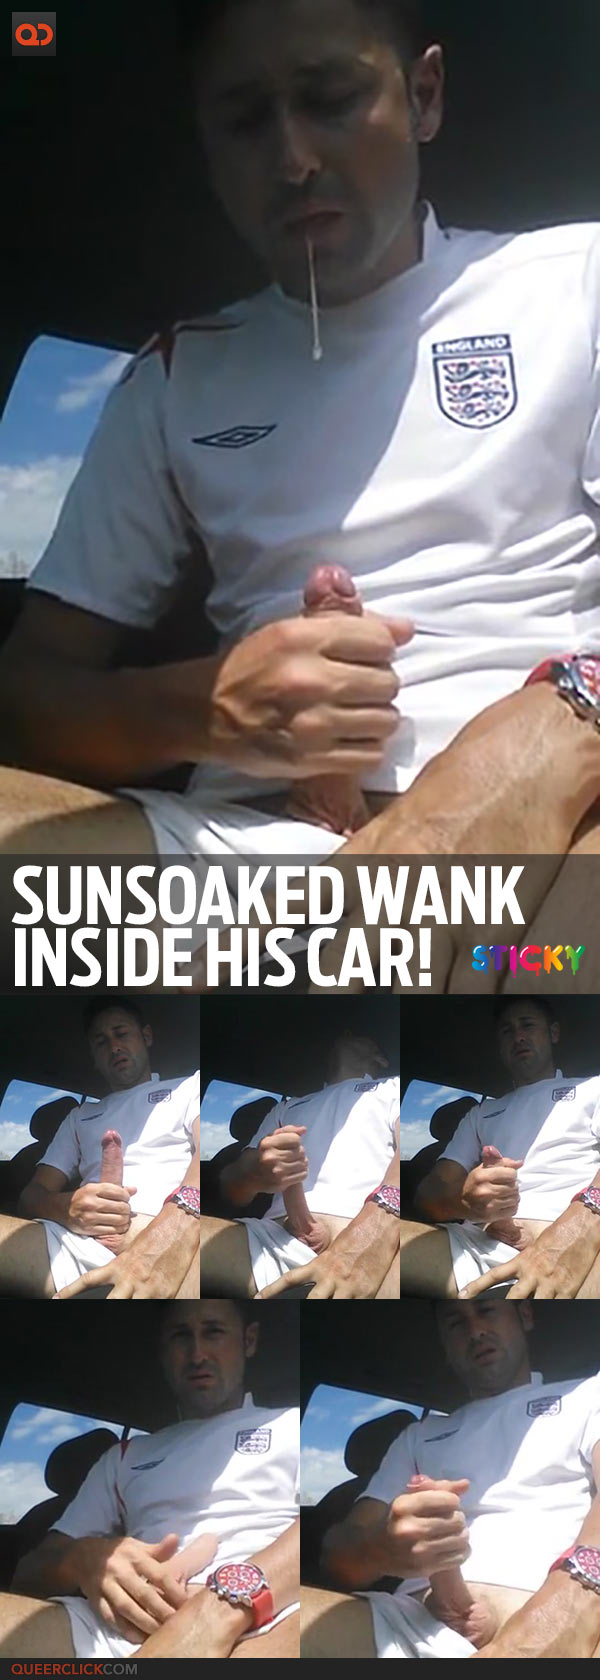 Sun-Soaked Wank Inside His Car!